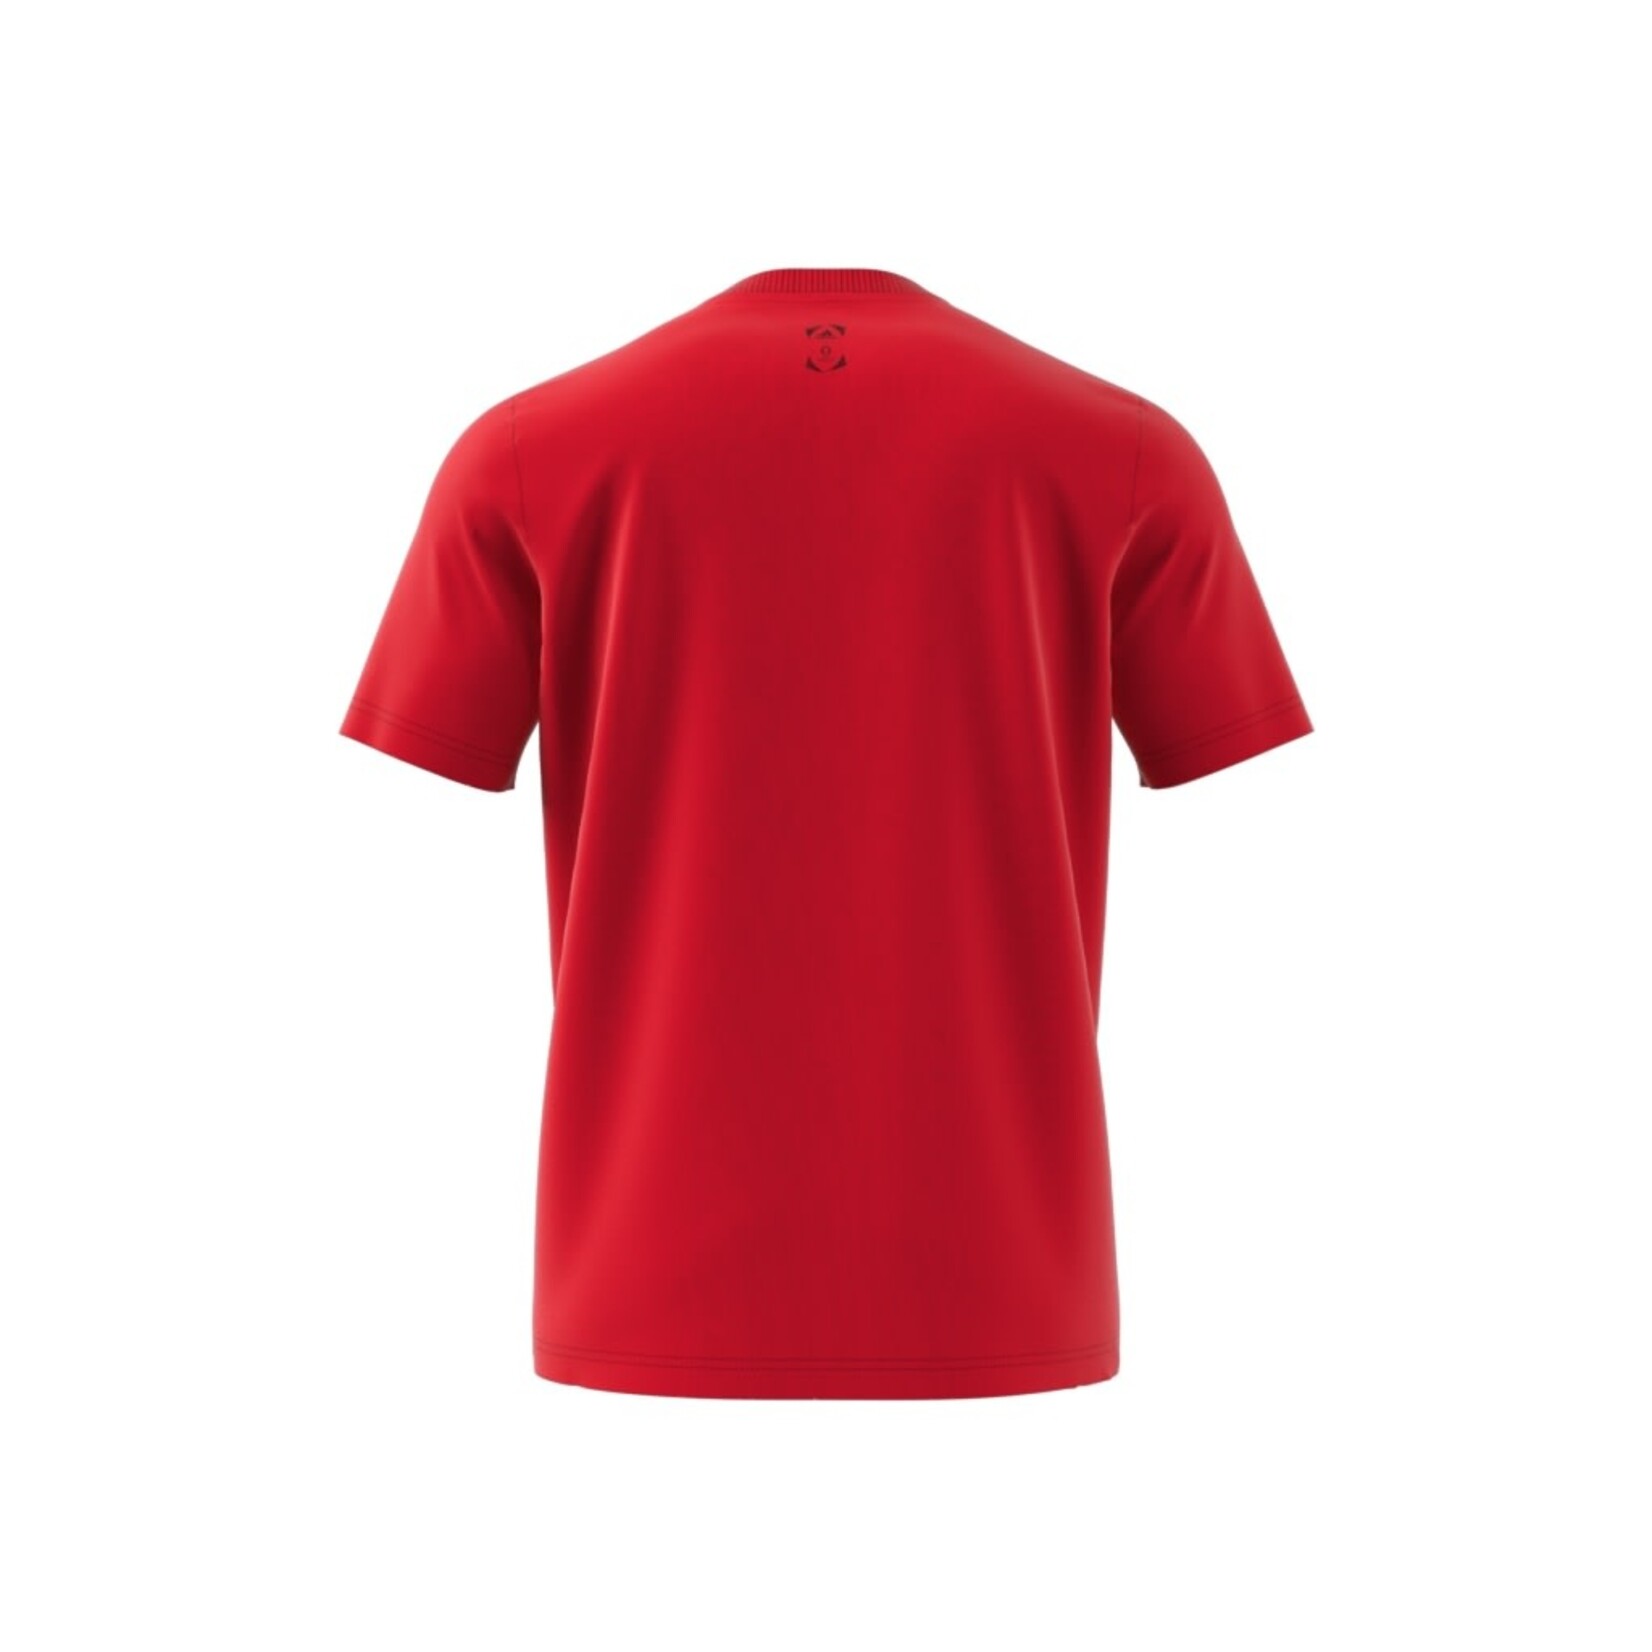 Adidas UEFA EURO24™ Spain T-Shirt